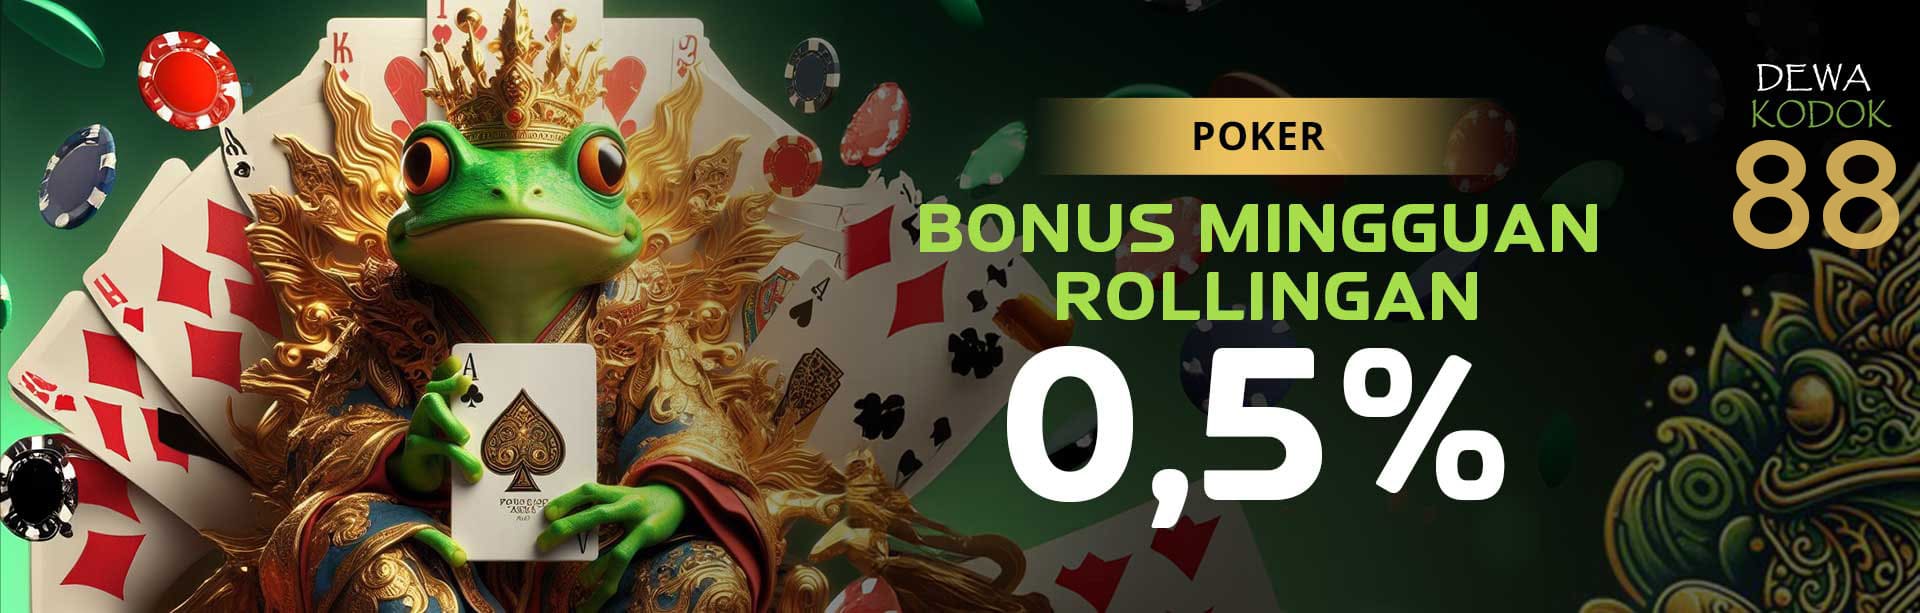 DEWAKODOK Bonus Mingguan Rollingan Poker 0.5%